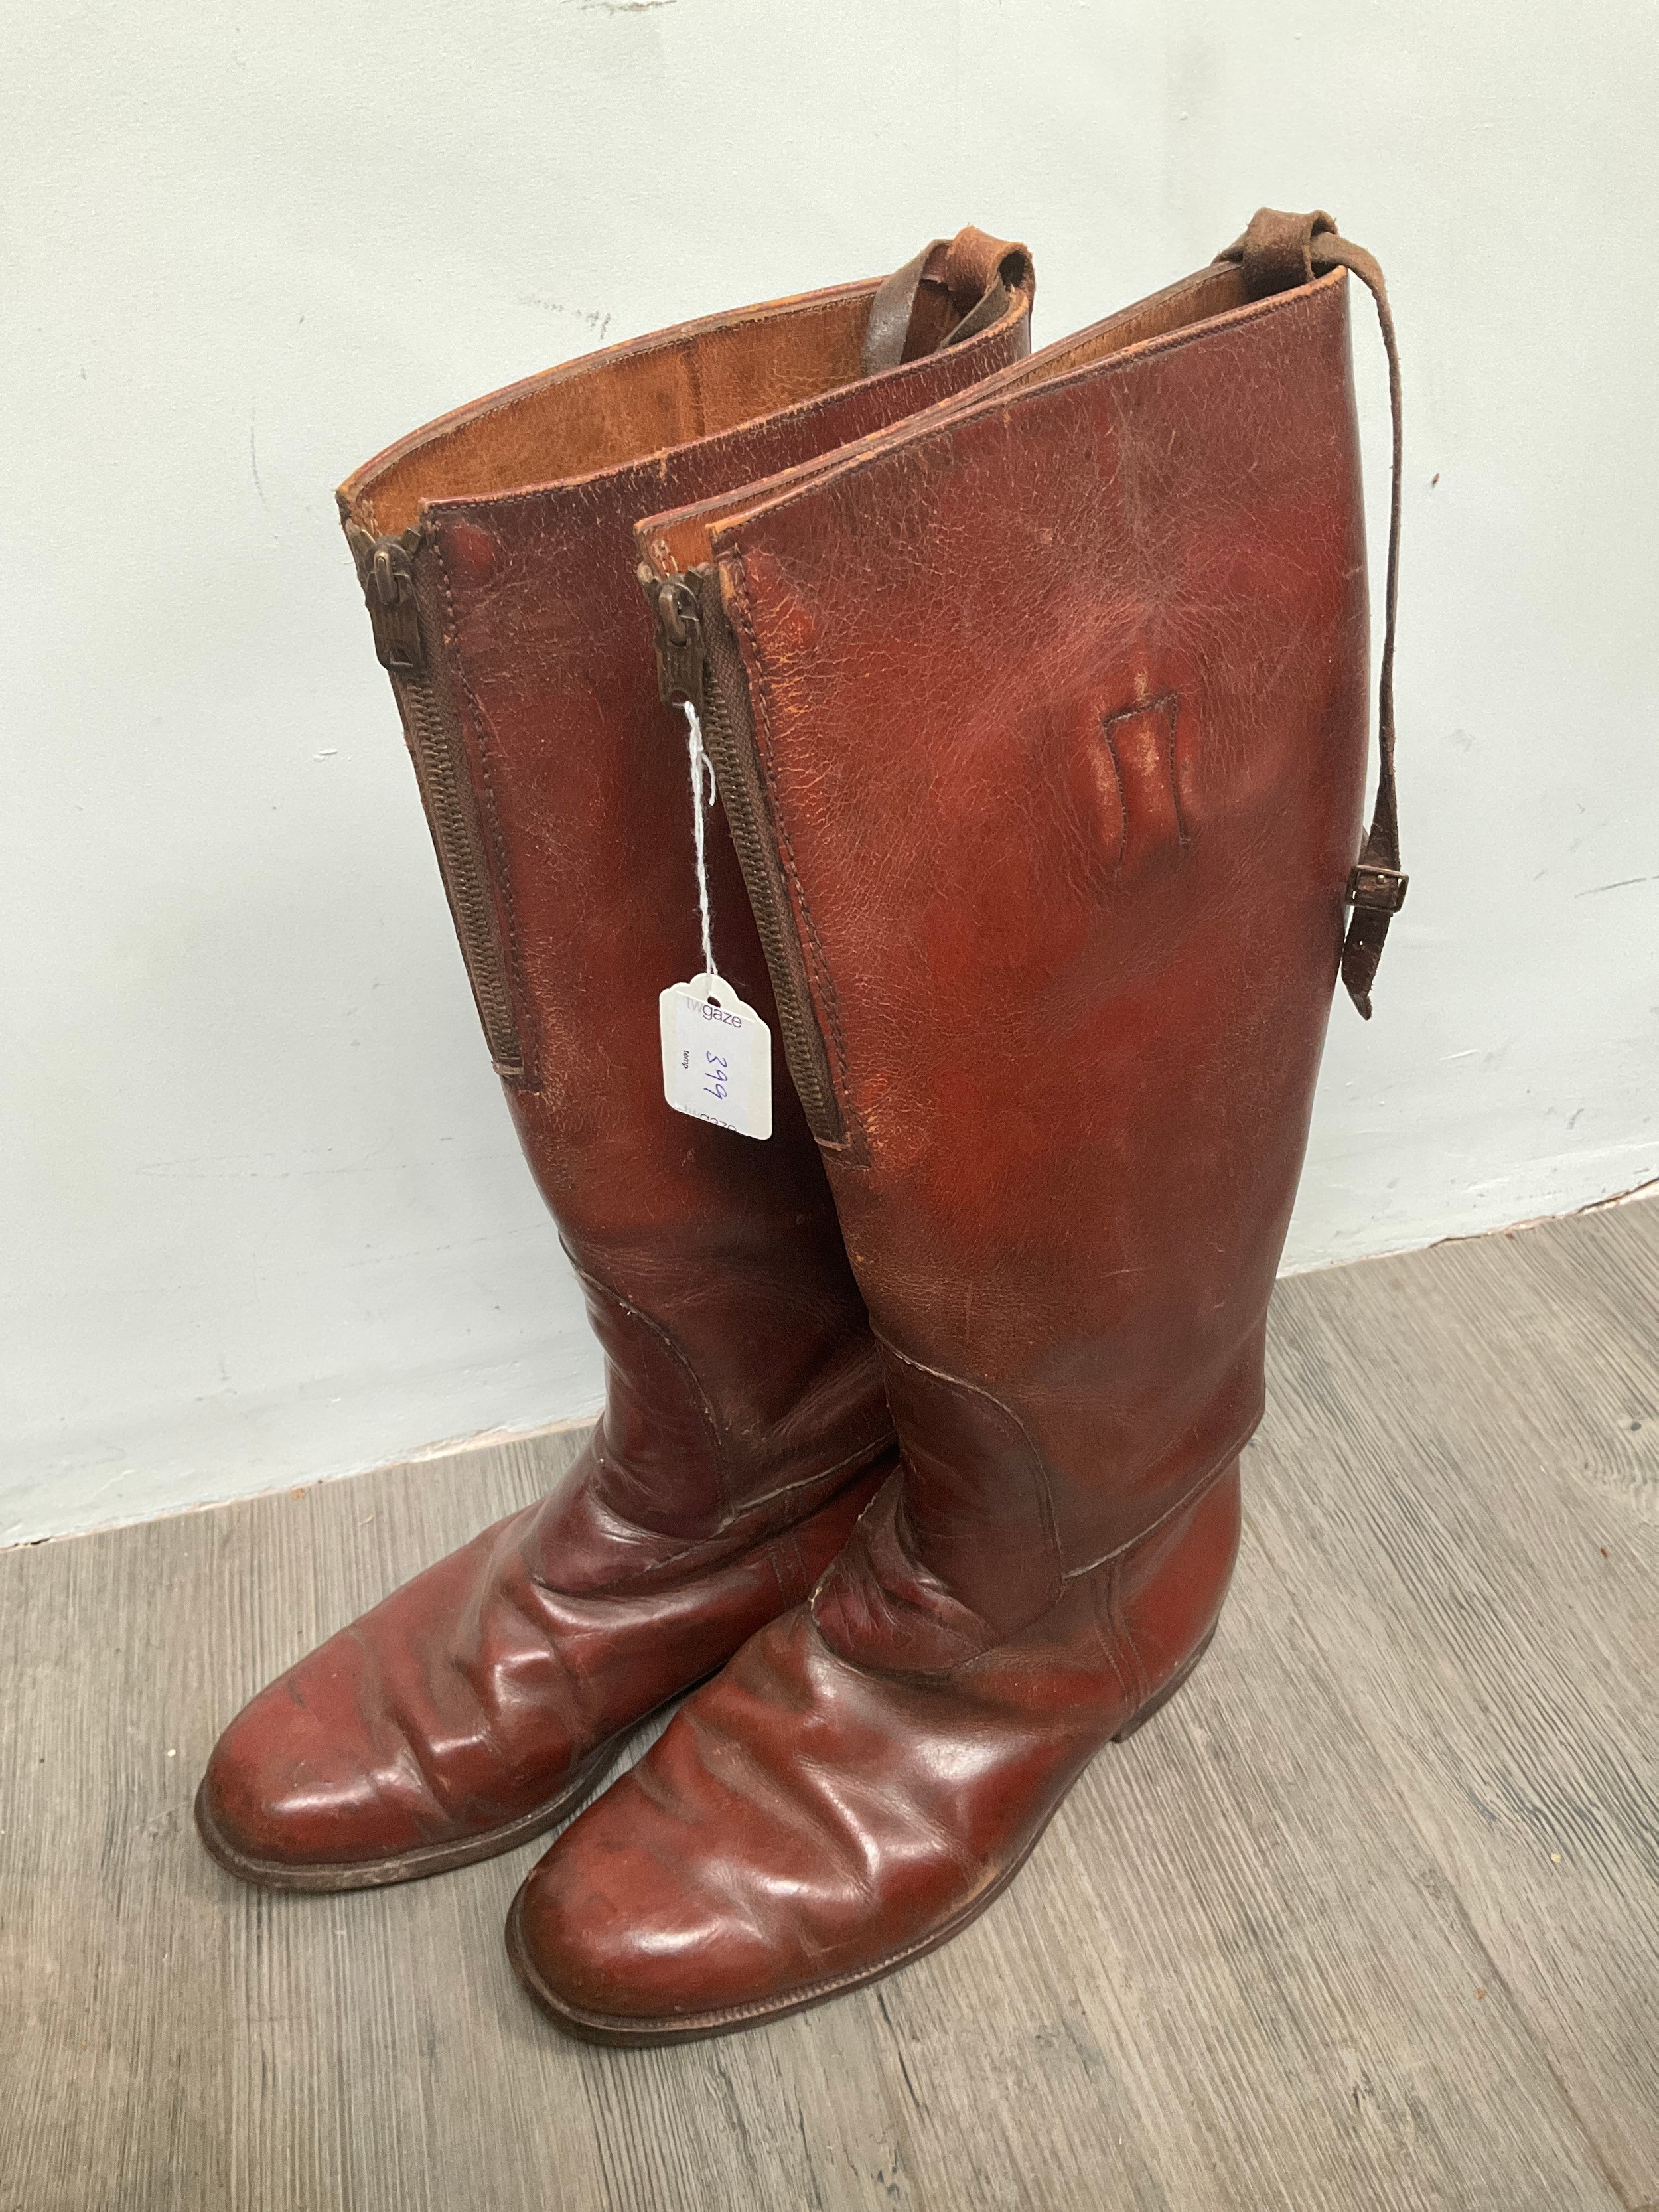 A pair of interwar era officer's brown leather boots